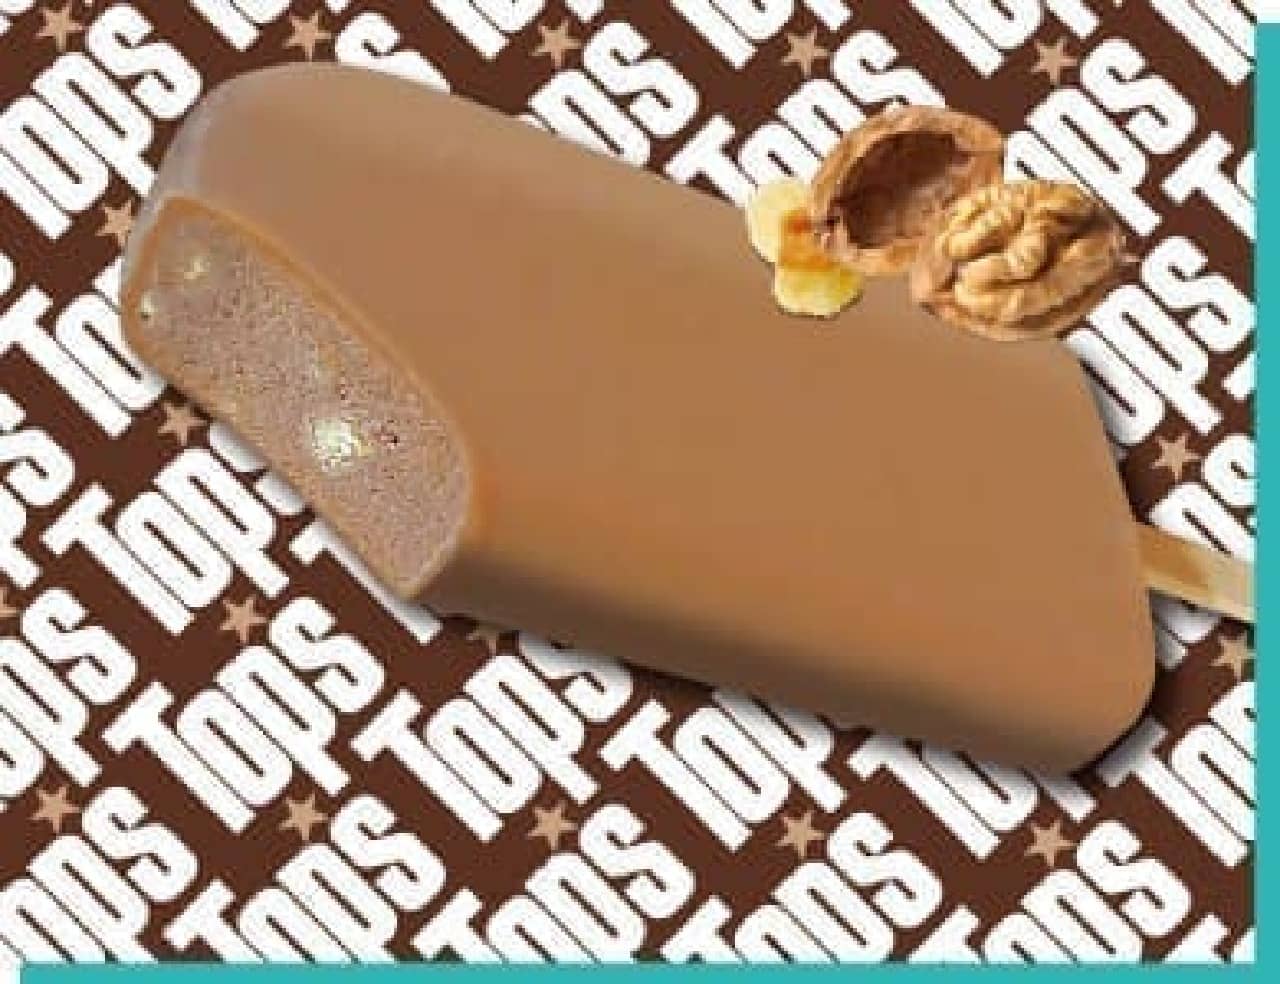 7-ELEVEN "Tops Chocolate Cake Ice Bar